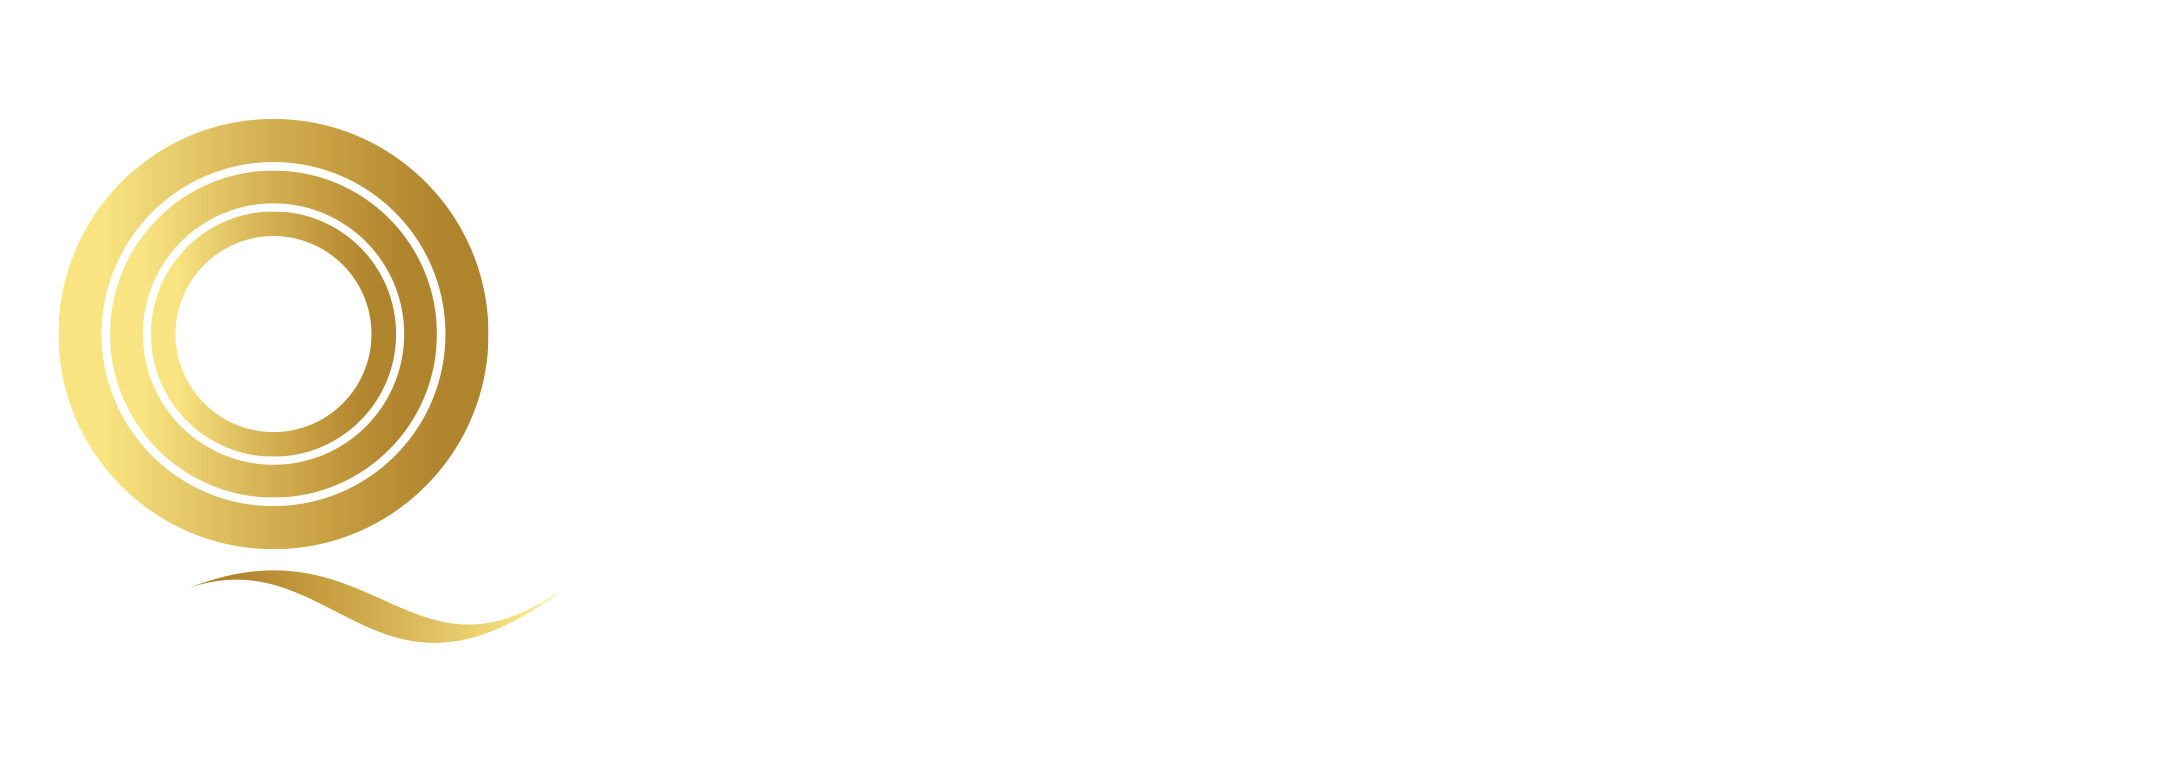 The Trinity Forum 2018